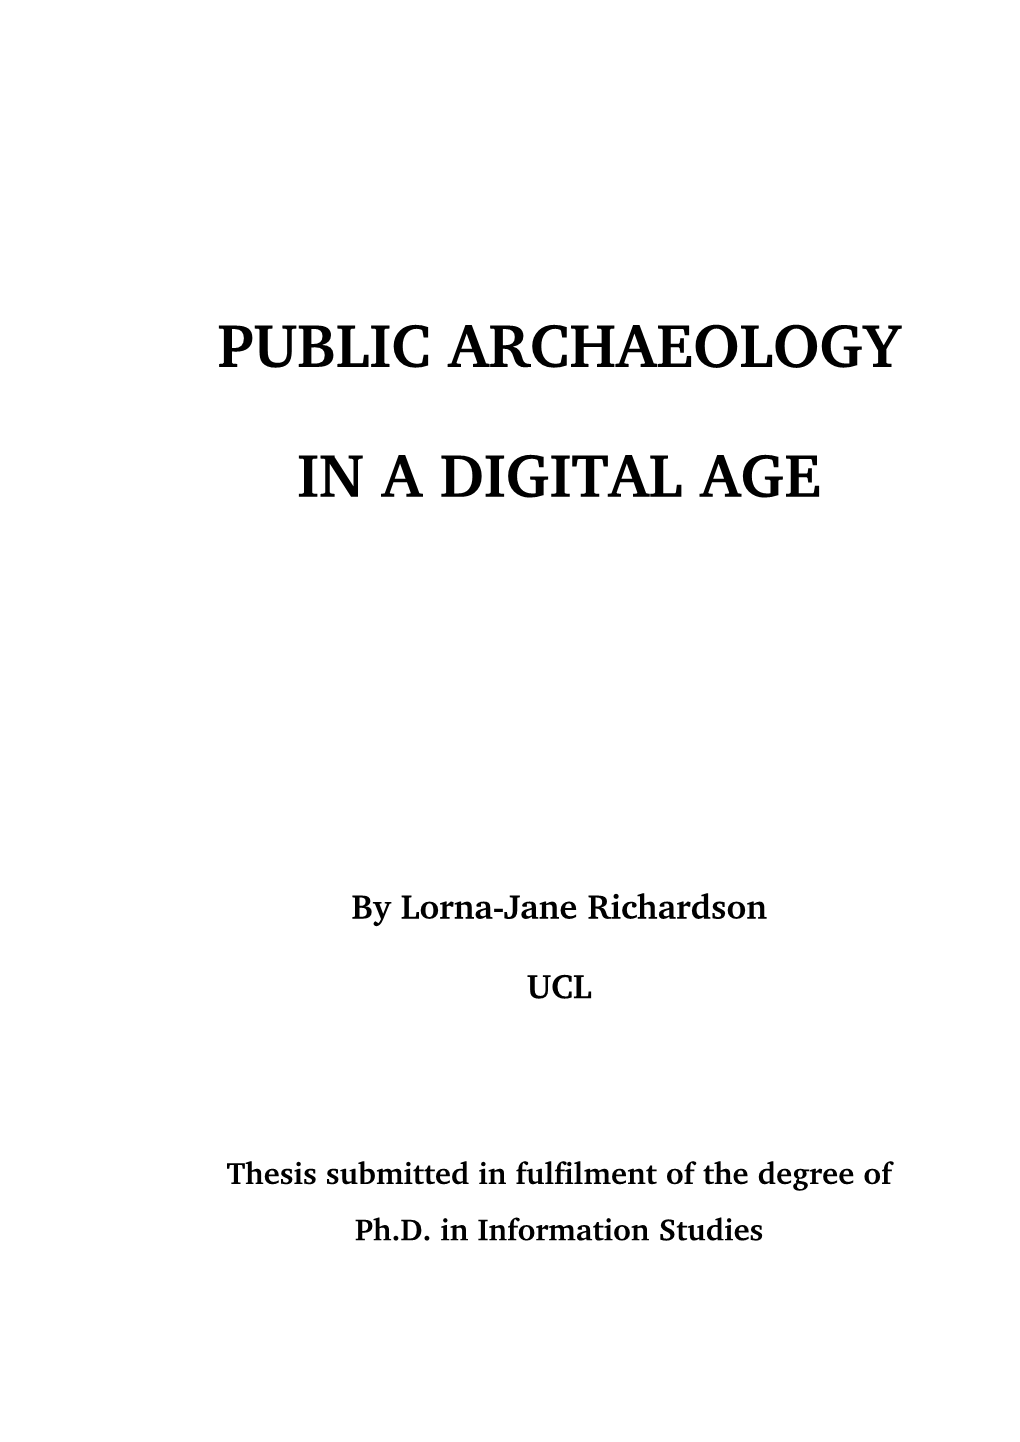 Public Archaeology in a Digital